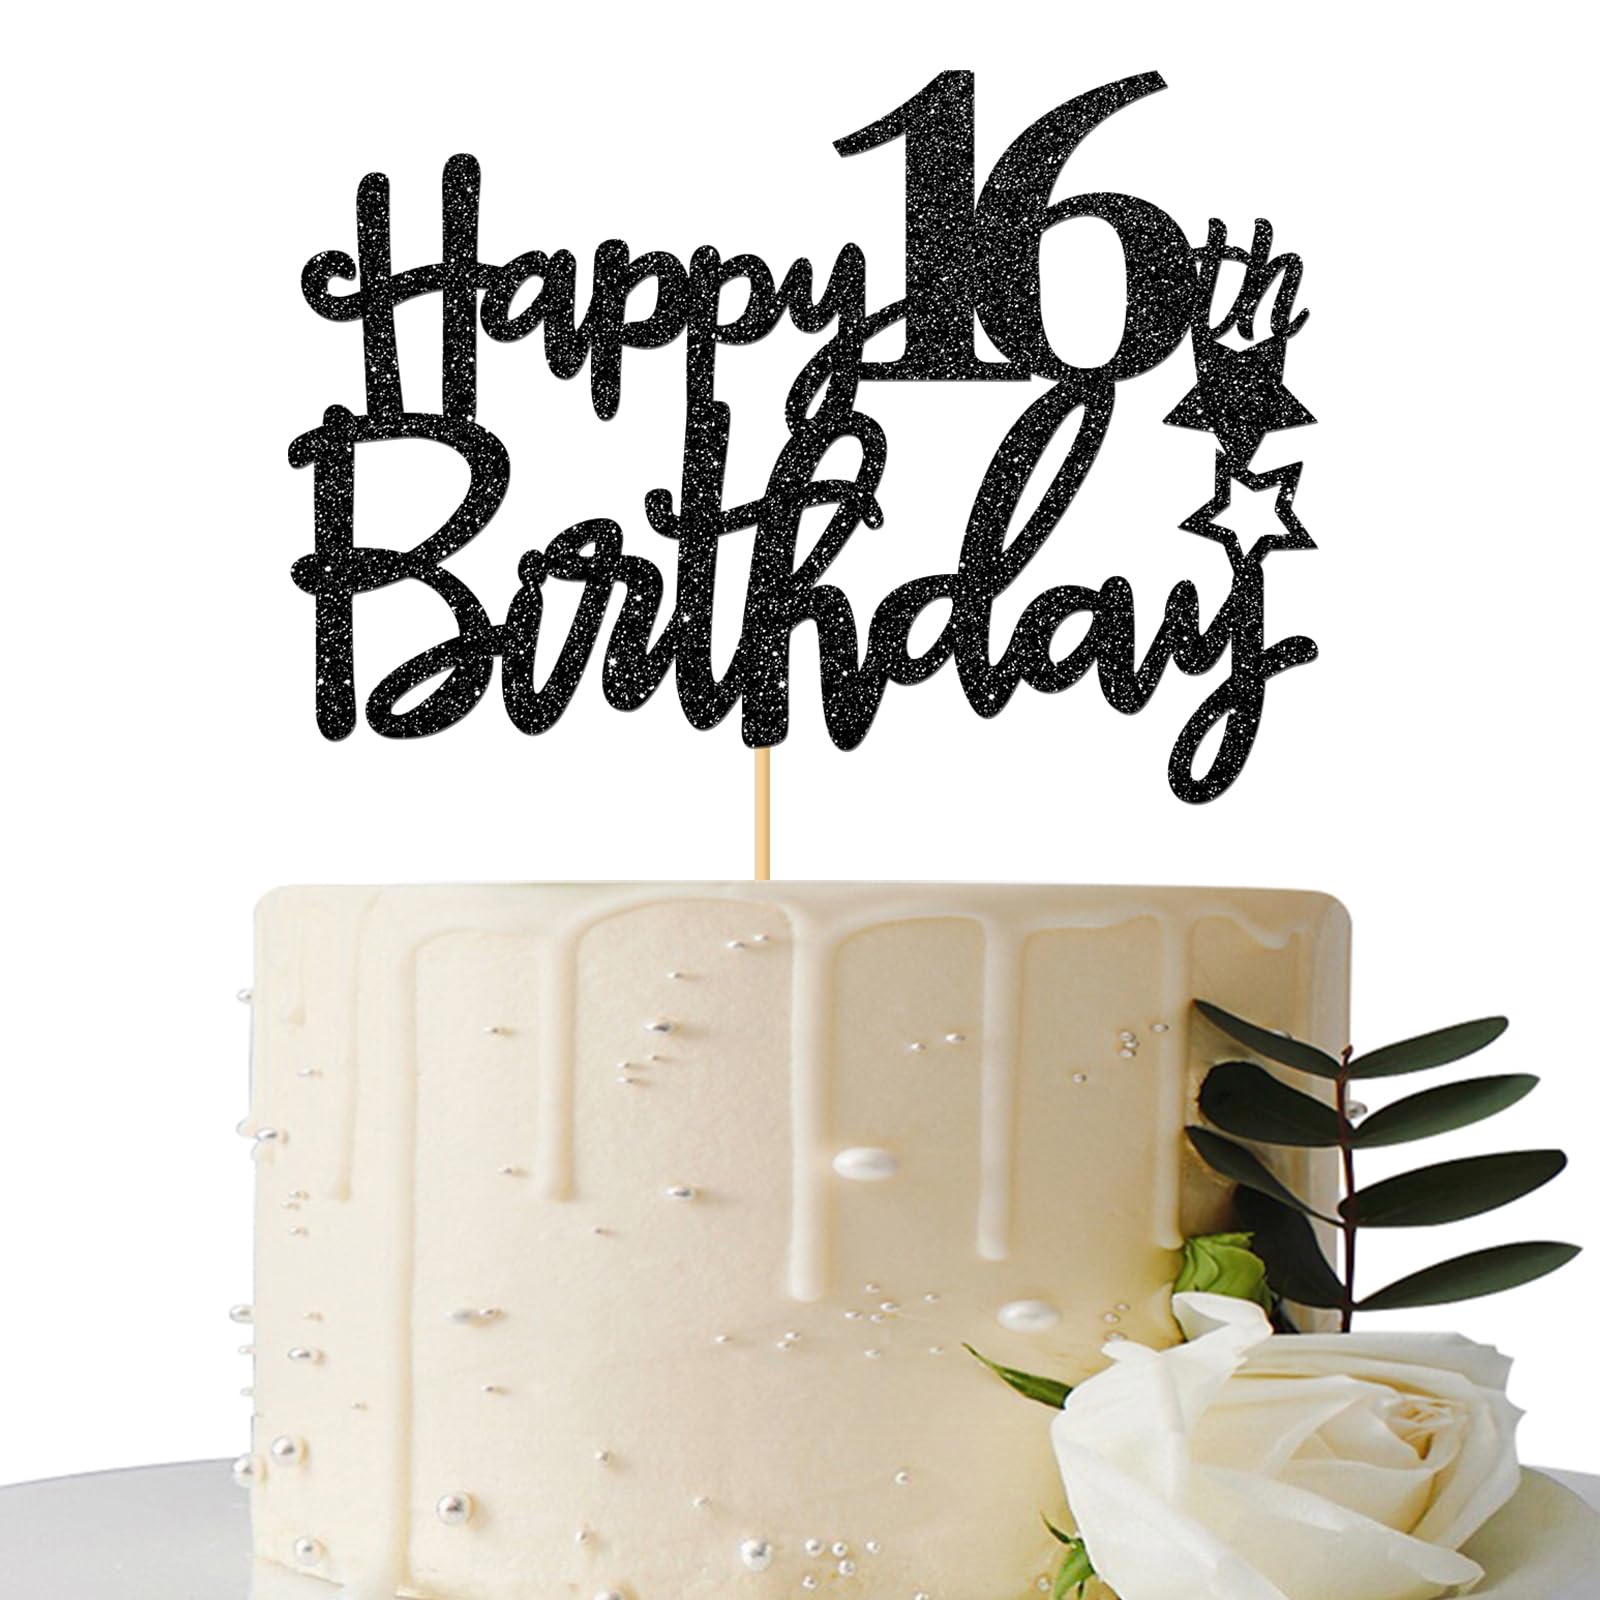 Cake tag: 16th birthday cakes for girls - CakesDecor